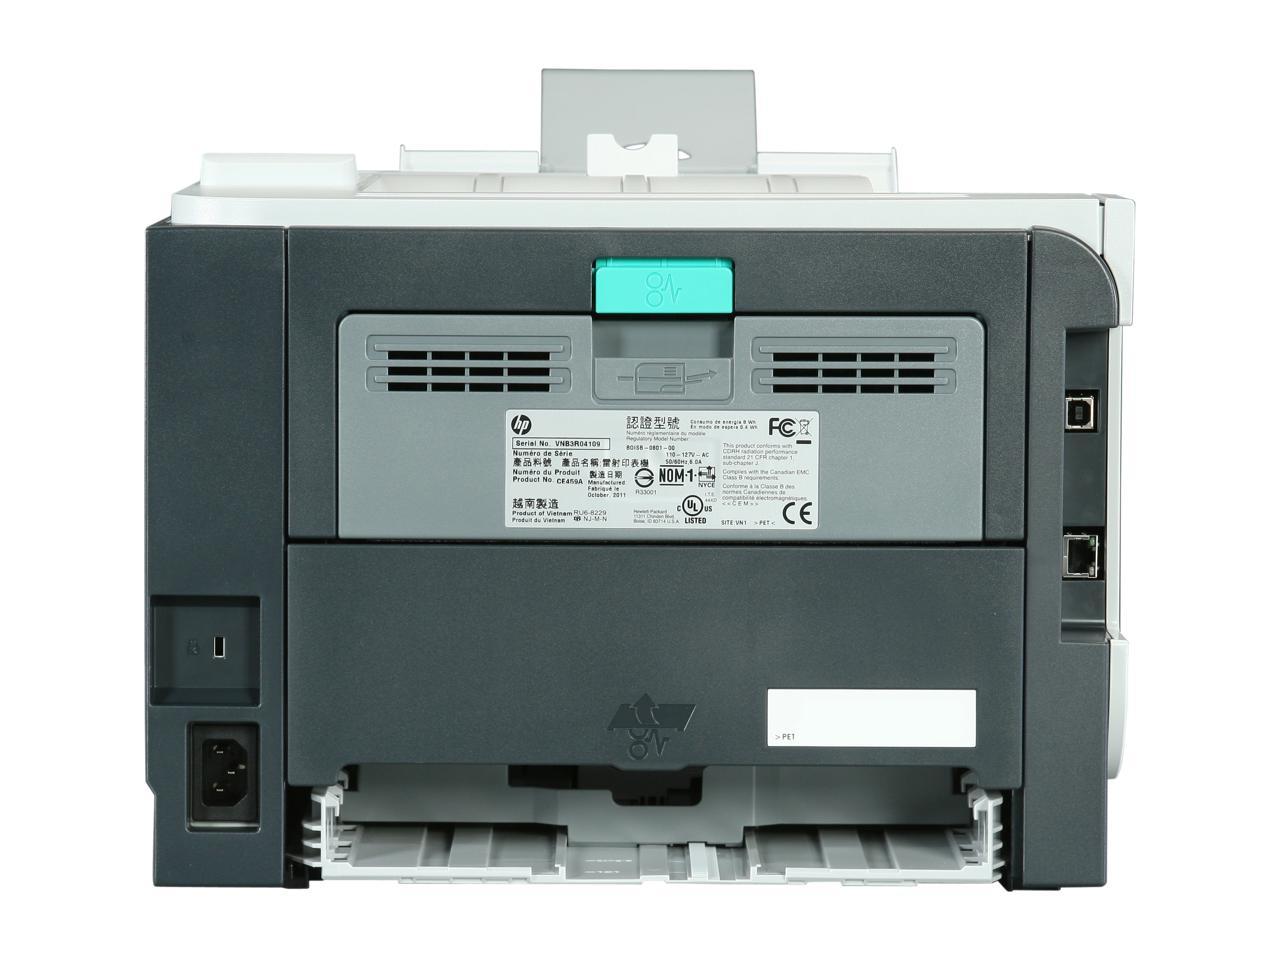 hp laserjet p2055dn printer general